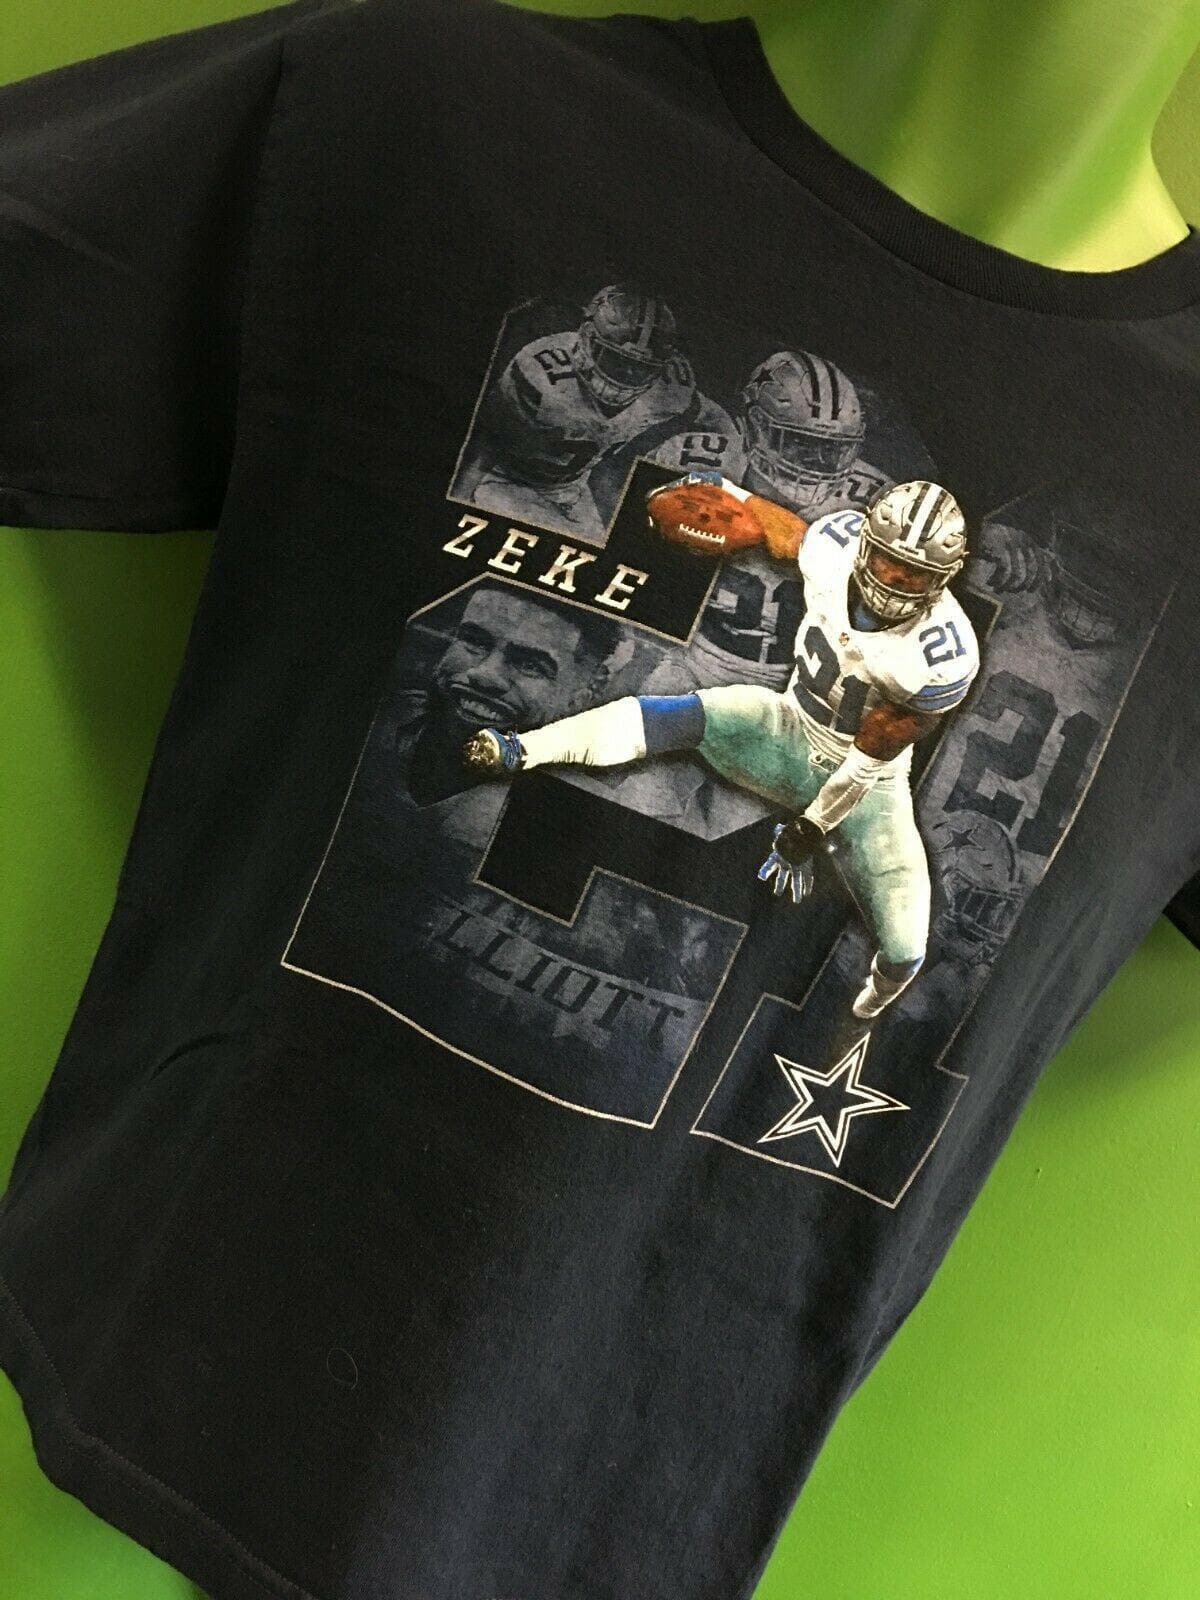 NFL Dallas Cowboys Ezekiel Elliot #21 T-Shirt Youth Large 14-16